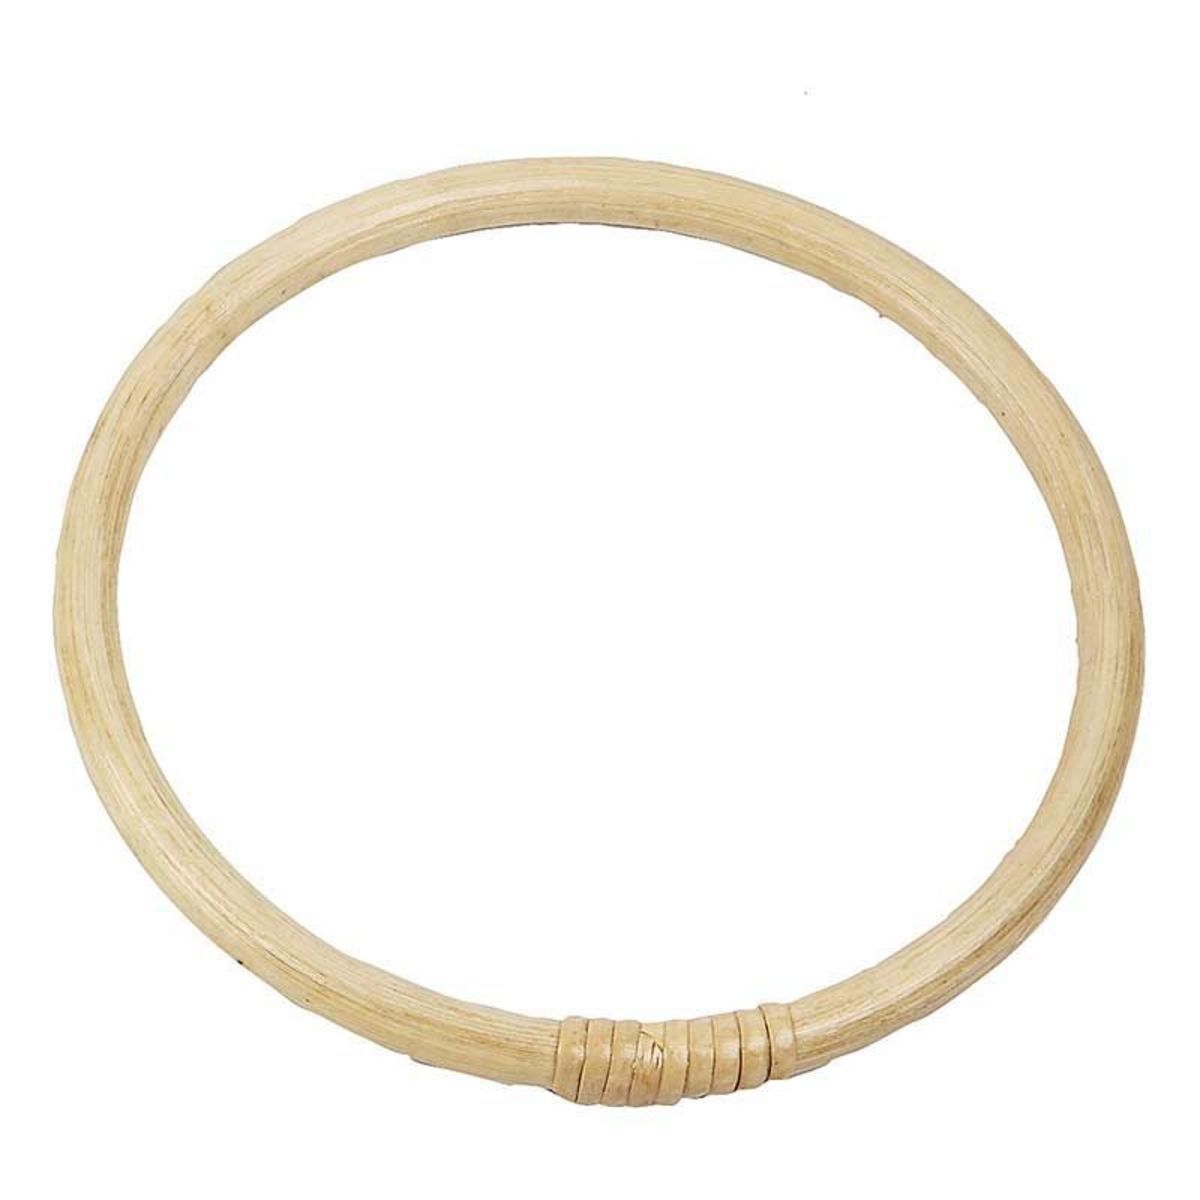  Anse de sac anneau en bambou - Ø 17 cm